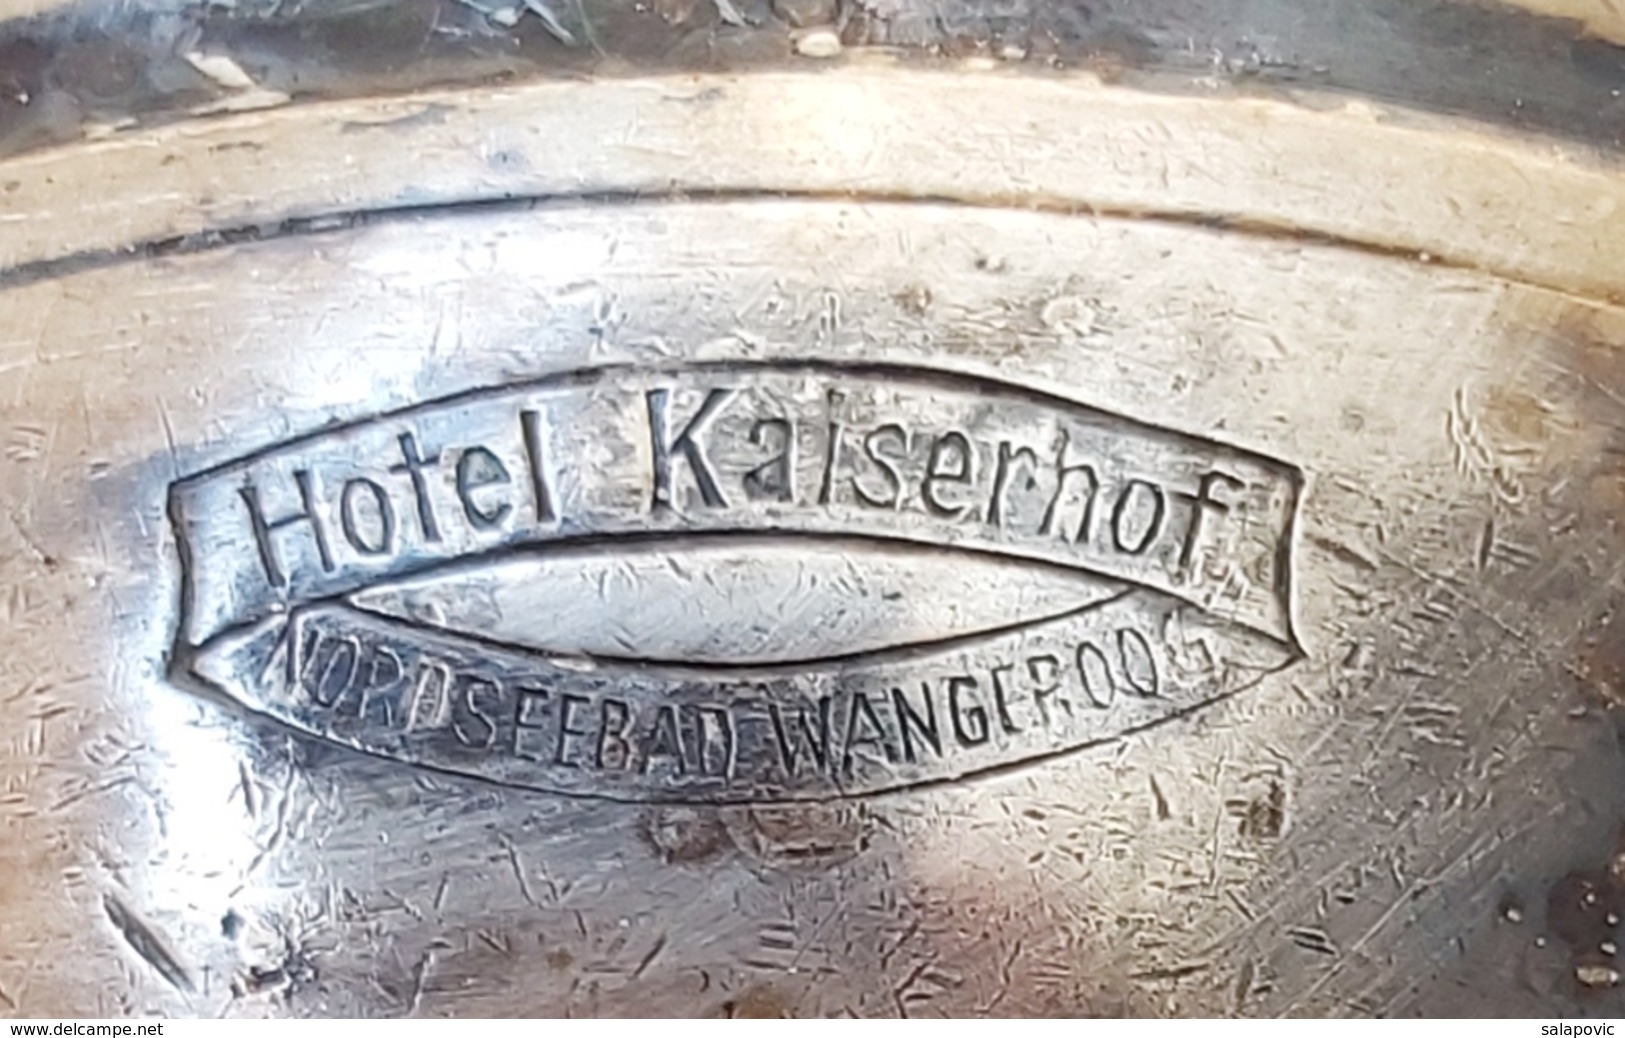 Old Cup Wine Glass Hotel Kaiserhof, Nord Seebad Wangeroog - Tasses